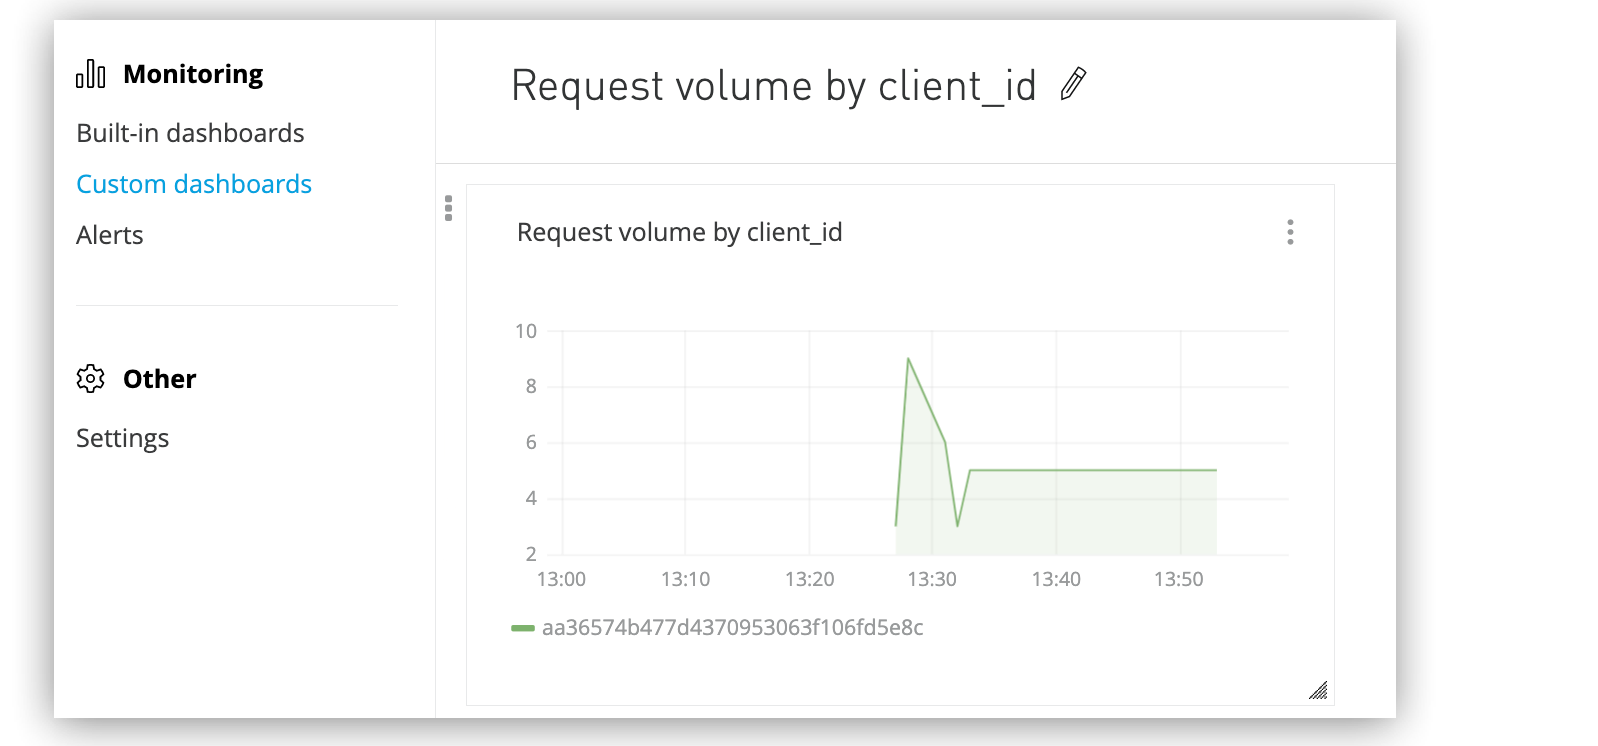 client_id ごとの要求量が表示されている Monitoring のカスタムグラフ